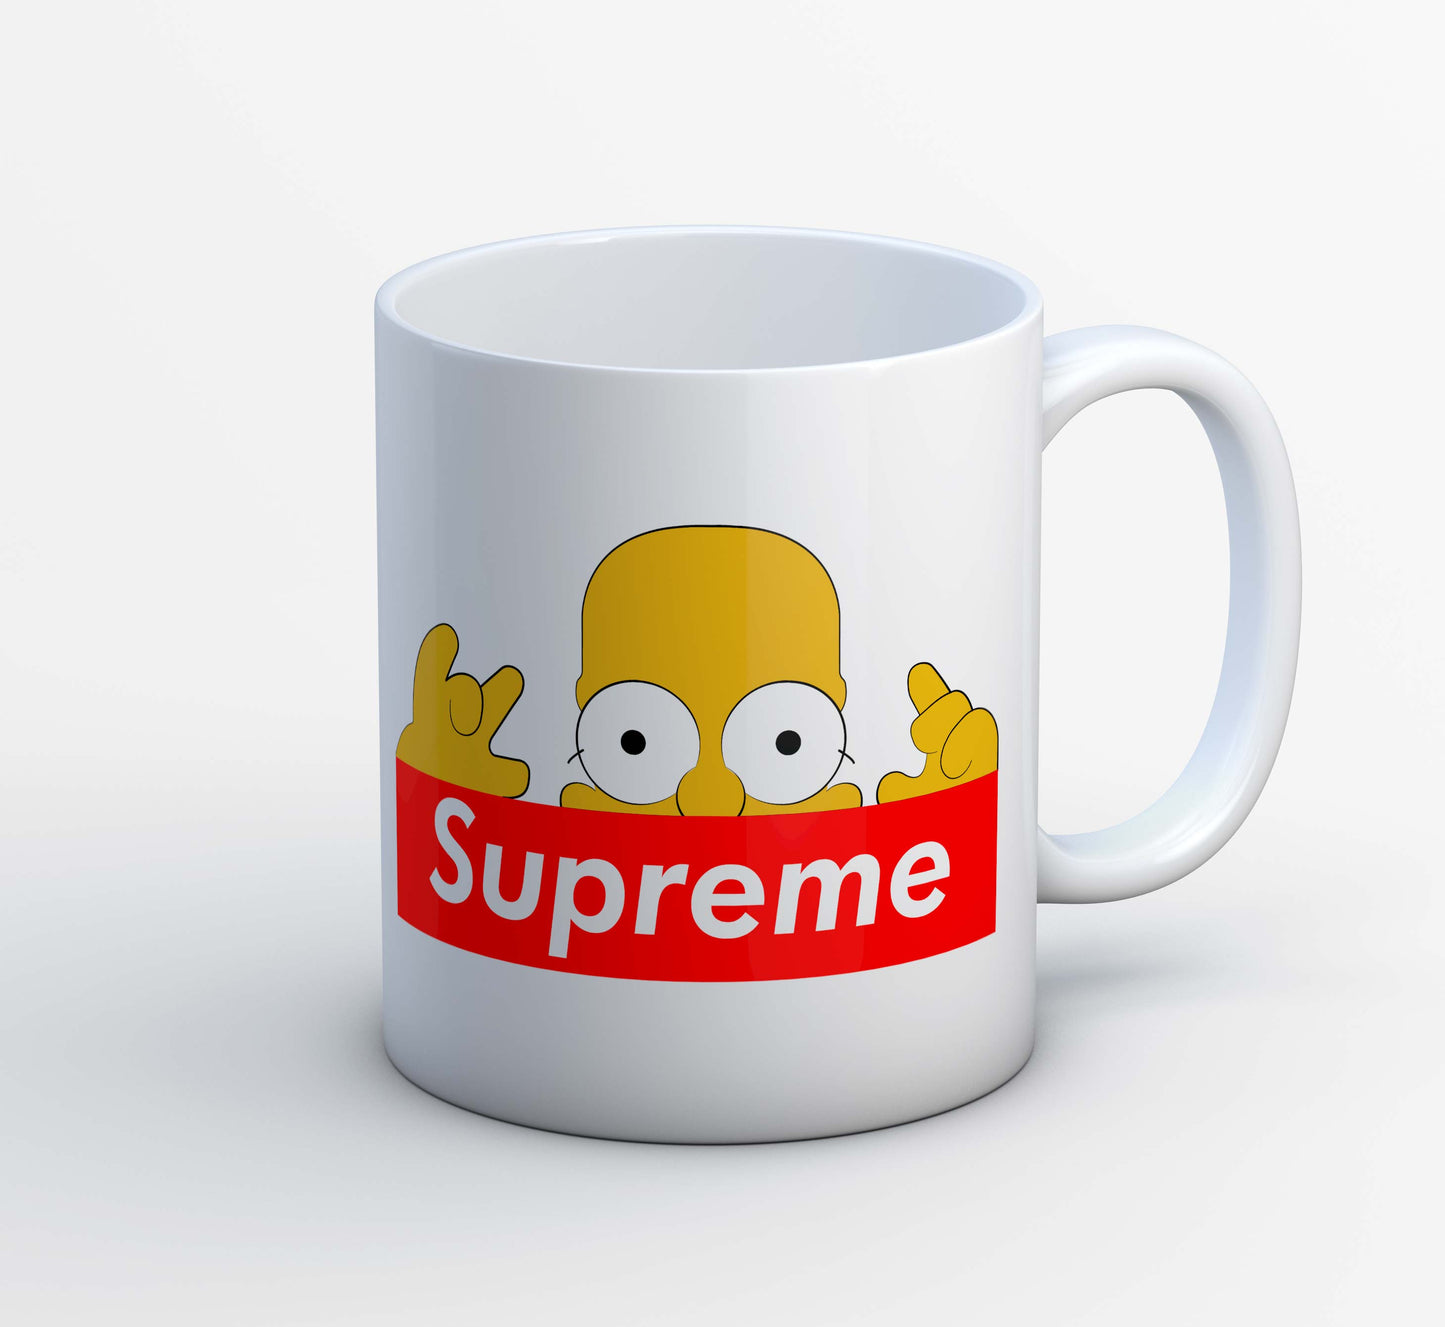 The Simpsons Mug Coffee Mug Ceramic Mug by The Banyan Tee